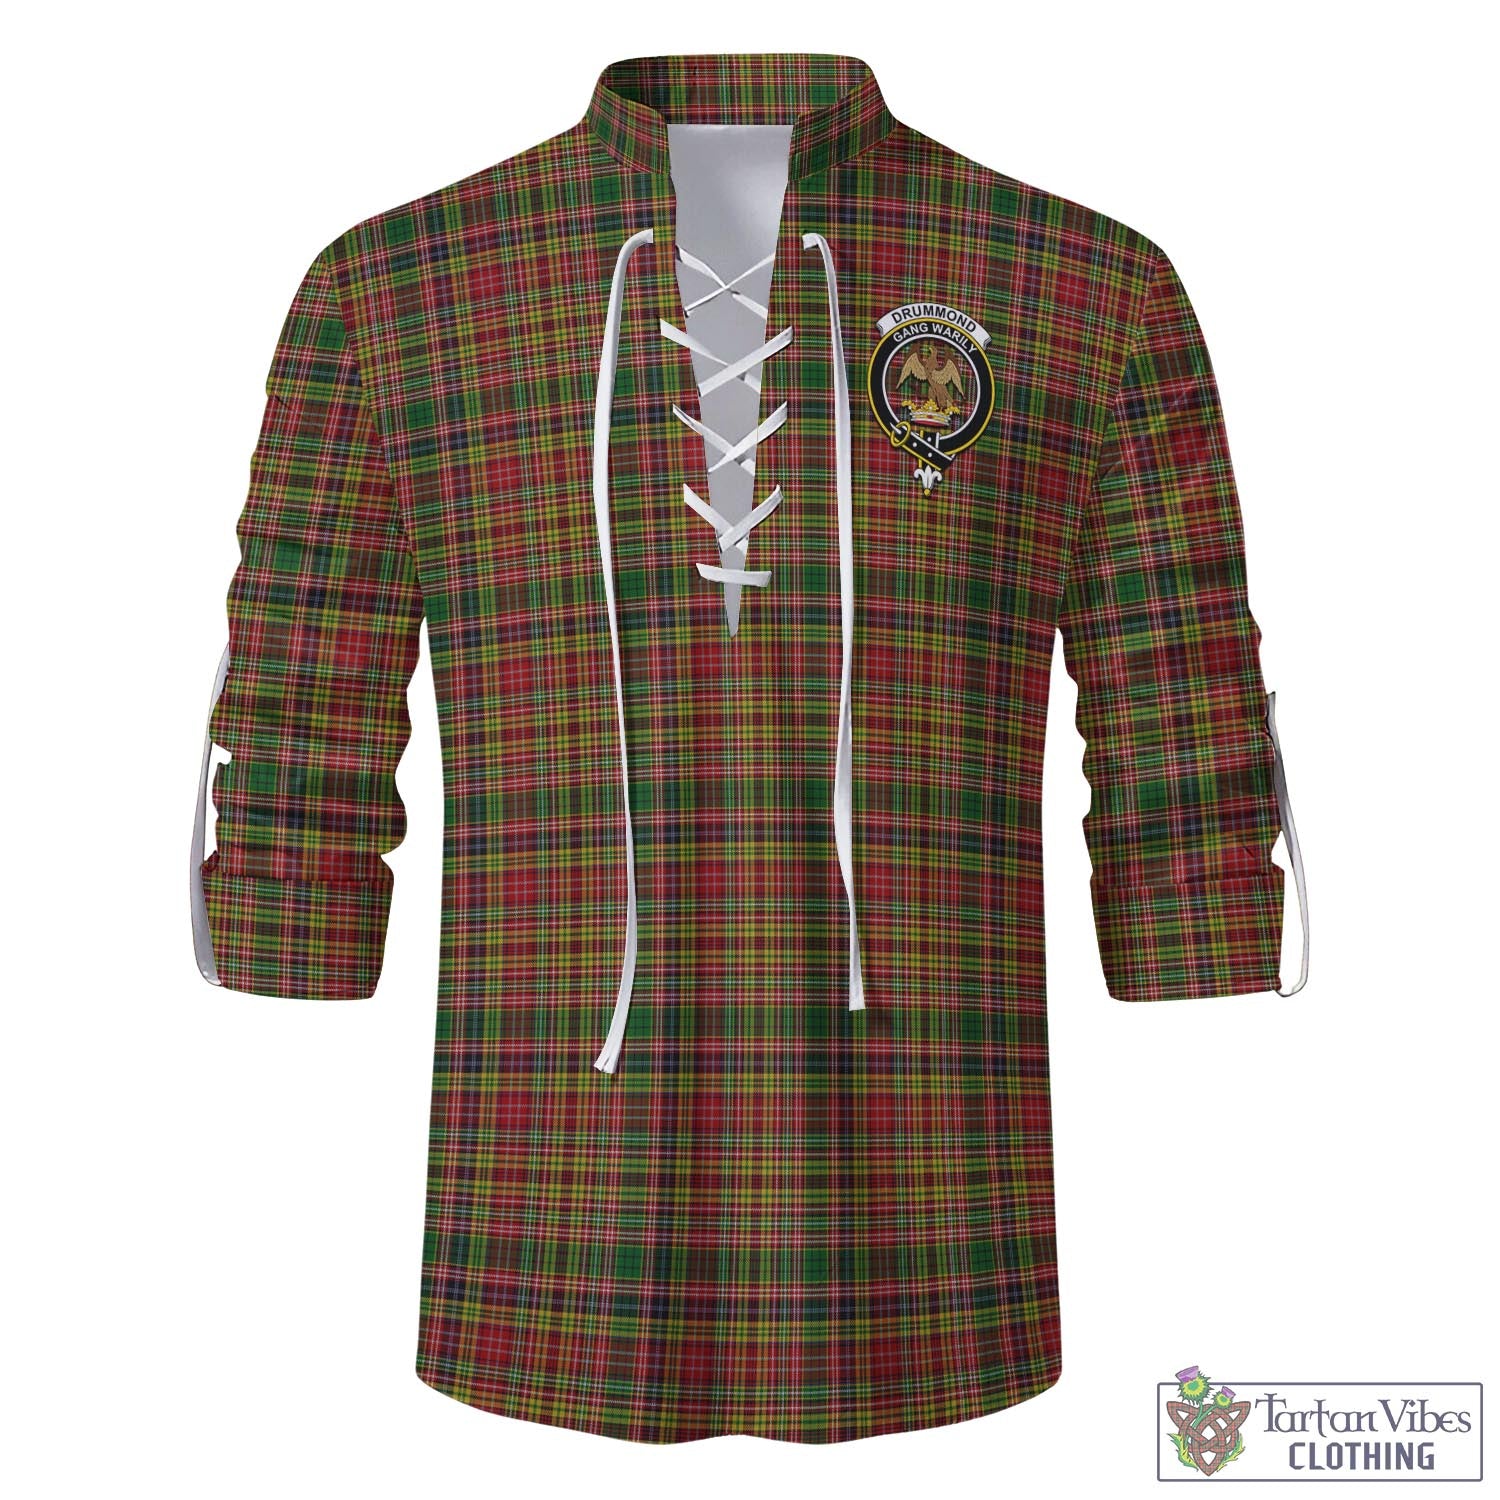 Tartan Vibes Clothing Drummond of Strathallan Tartan Men's Scottish Traditional Jacobite Ghillie Kilt Shirt with Family Crest